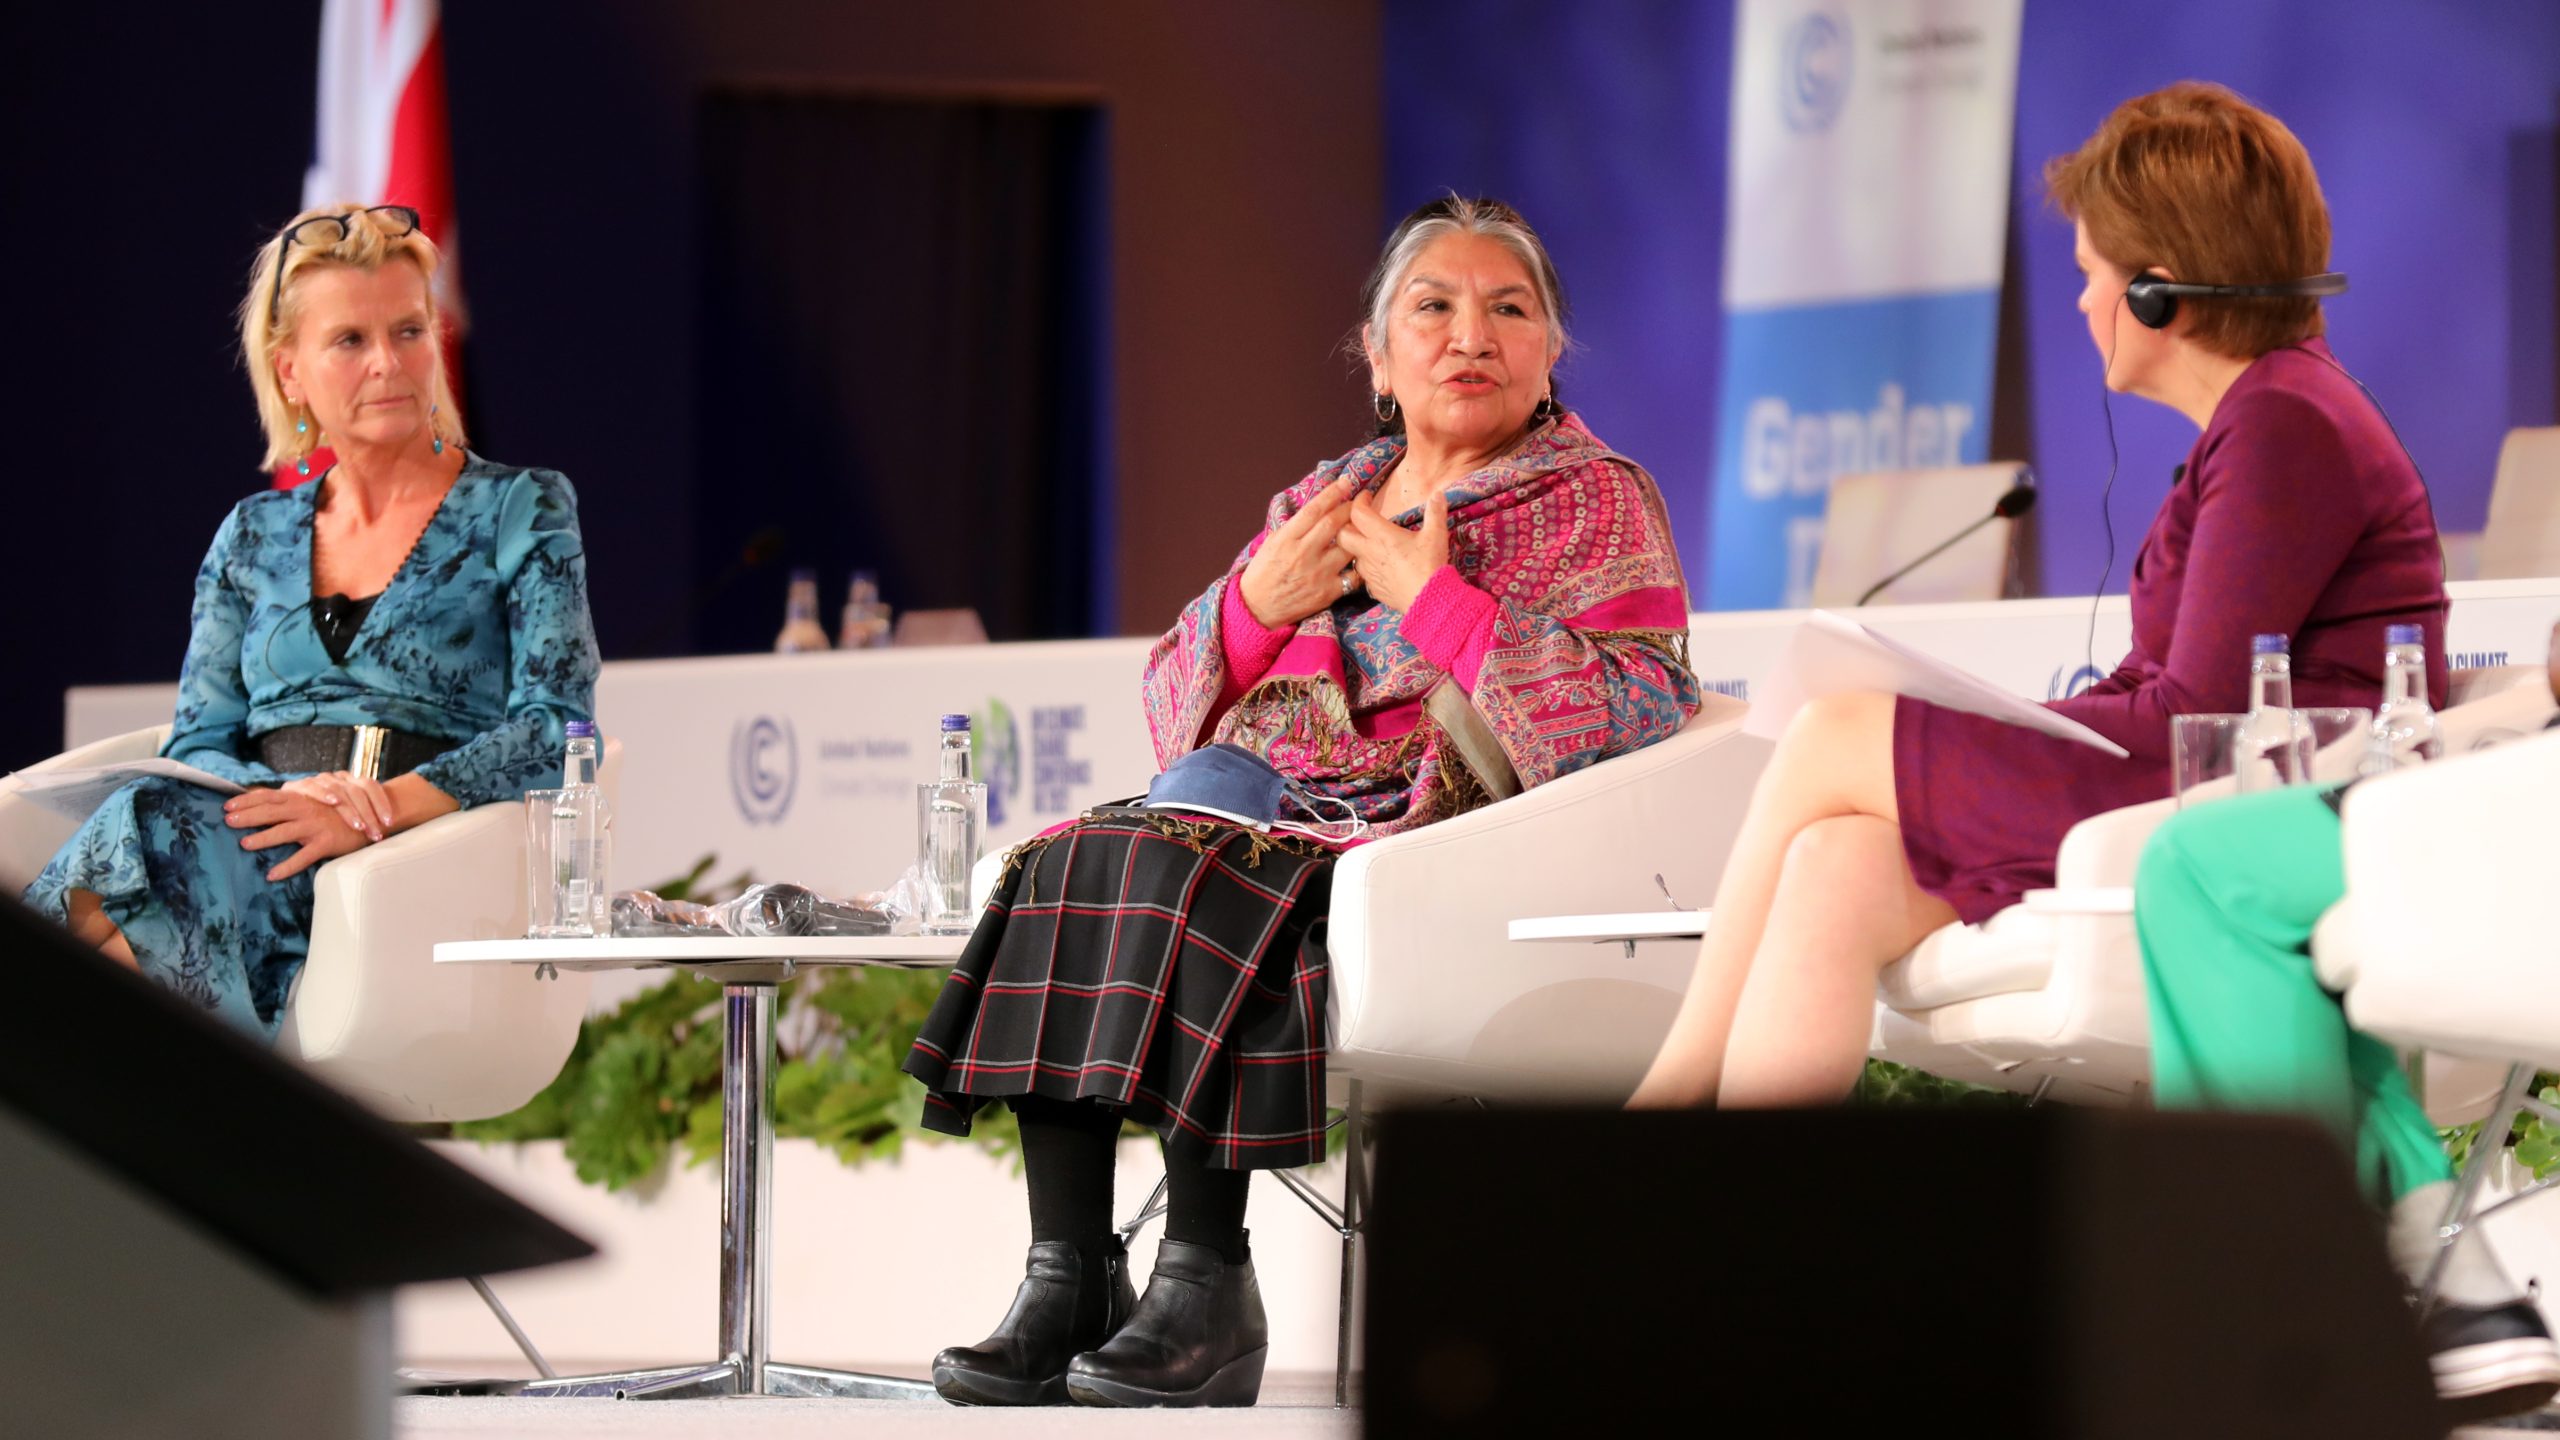 Åsa Regnér, Deputy Executive Director, UN Women; Tarcila Rivera Zea, Indigenous activist, Founder, Chirapaq; and Nicola Sturgeon, First Minister of Scotland